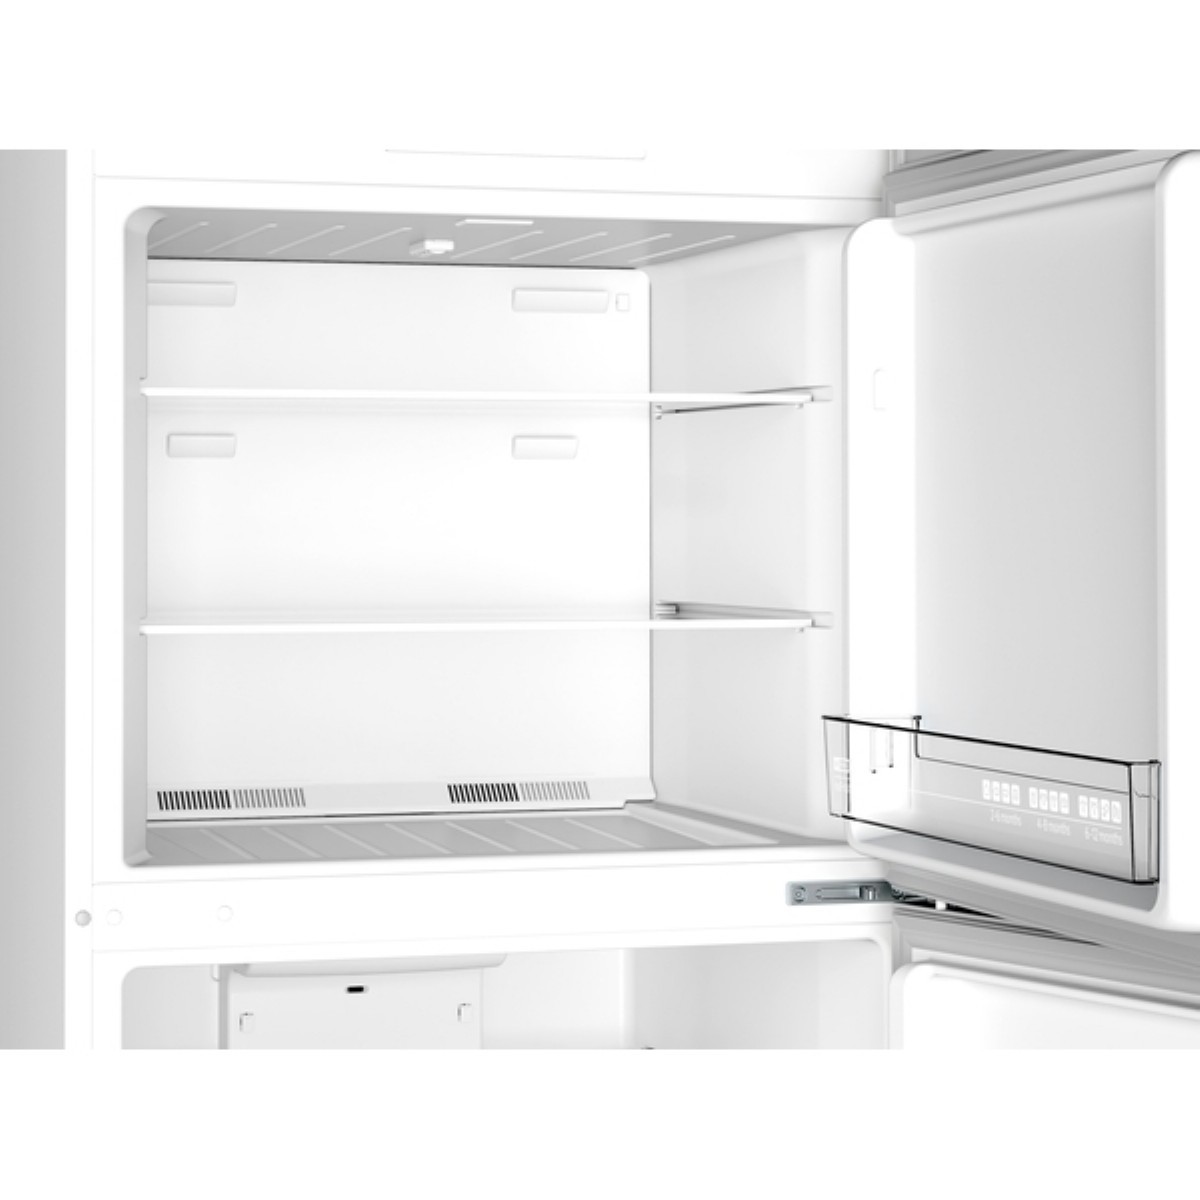 Buzdolabı | Siemens KD55NNWF1N Çift Kapılı No Frost Buzdolabı | KD55NNWF1N | KD55NNWF1N, Siemens KD55NNWF1N Çift Kapılı No Frost Buzdolabı, Siemens en ucuz buzdolabı, en uygun budolabı, uygun buzdolabı modelleri | 